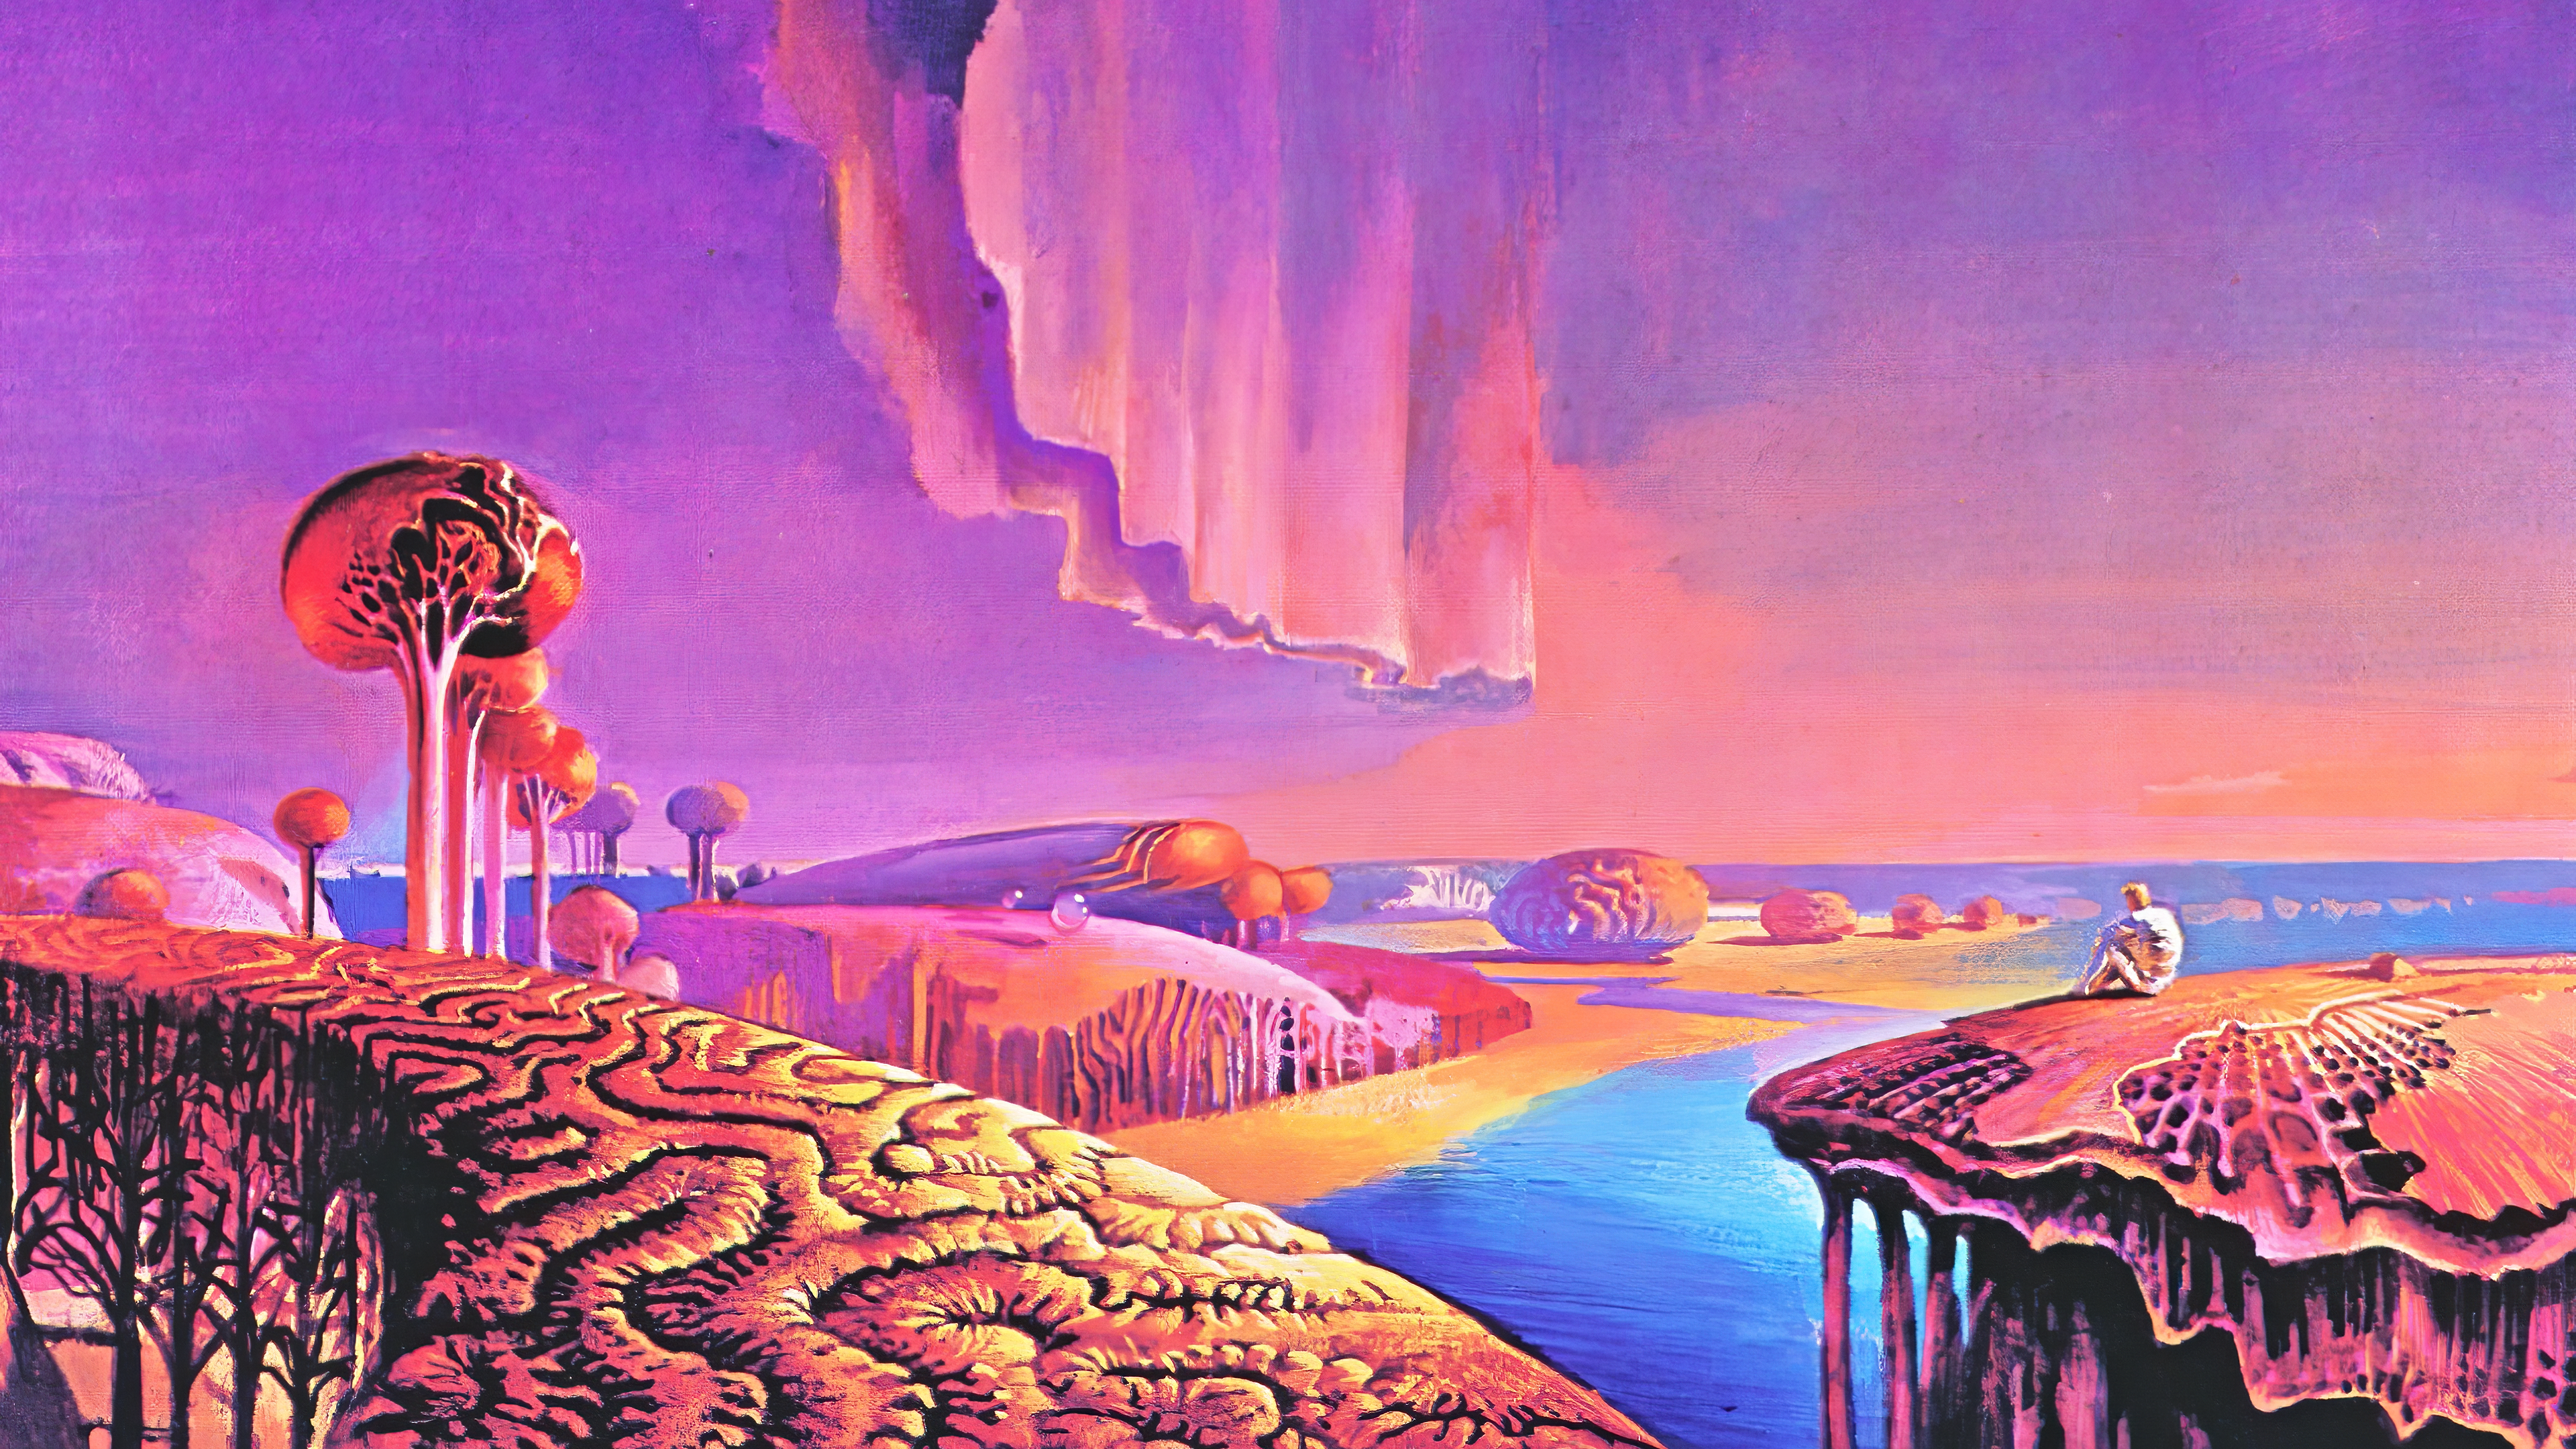 The Plains Of Tartarus by Bruce Pennington [3840x2160]